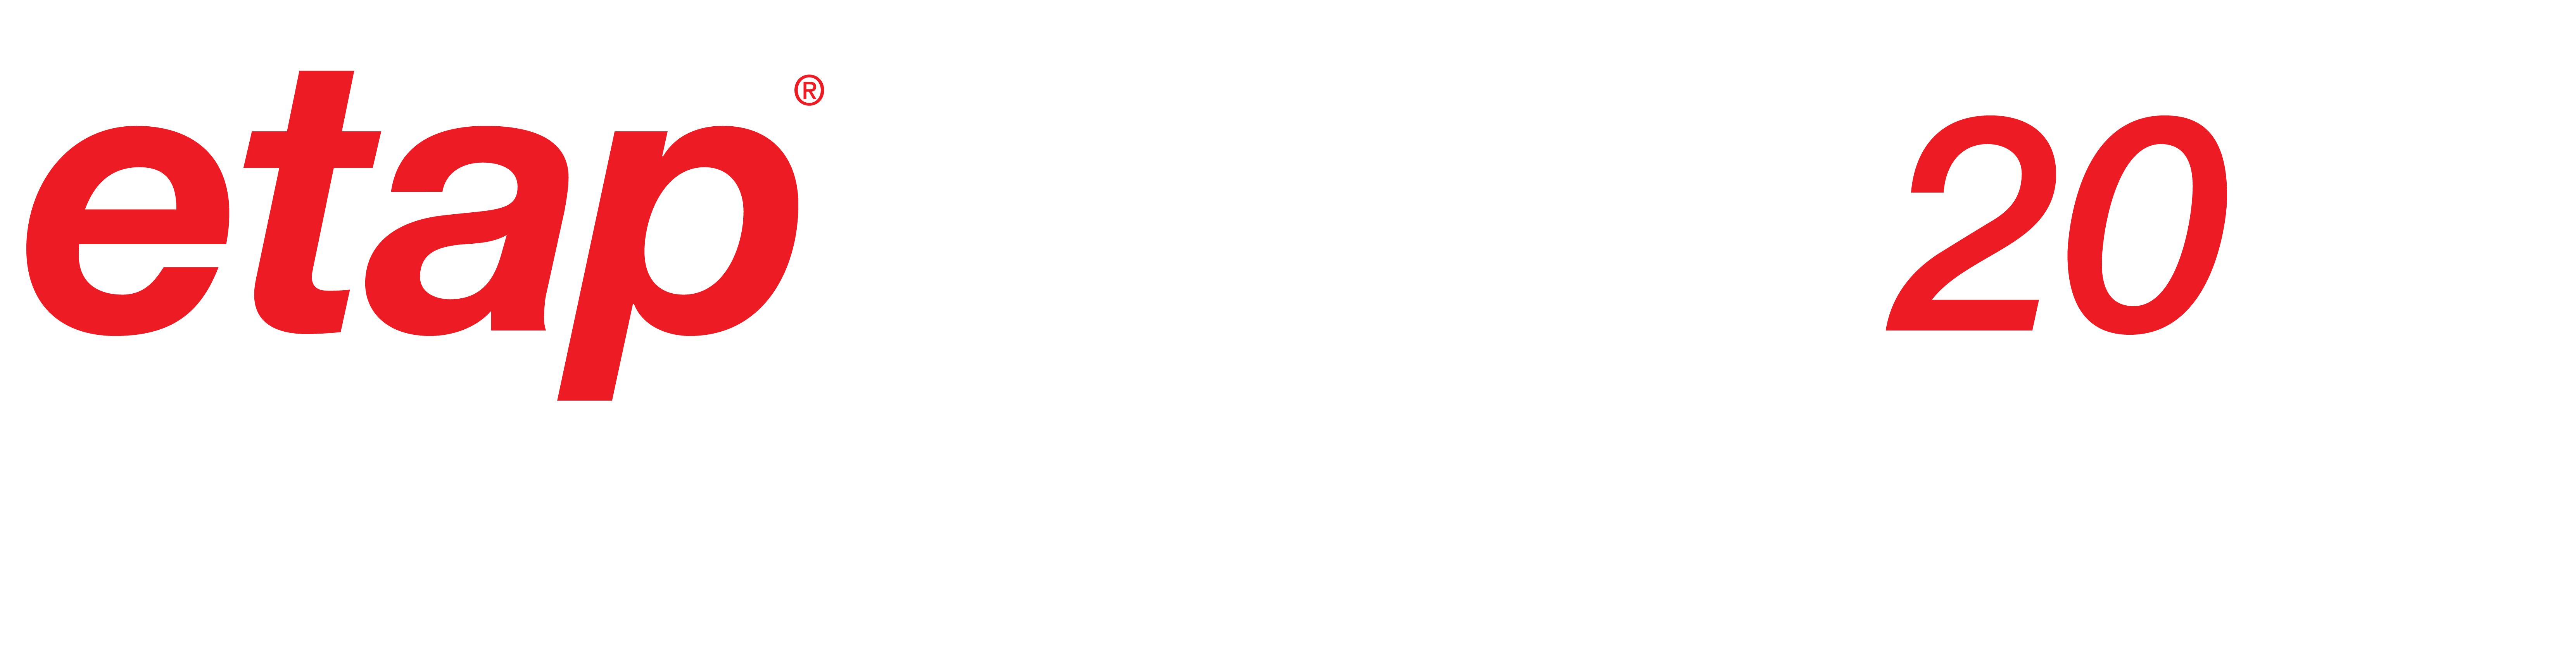 European-Summit-logo-2020-2